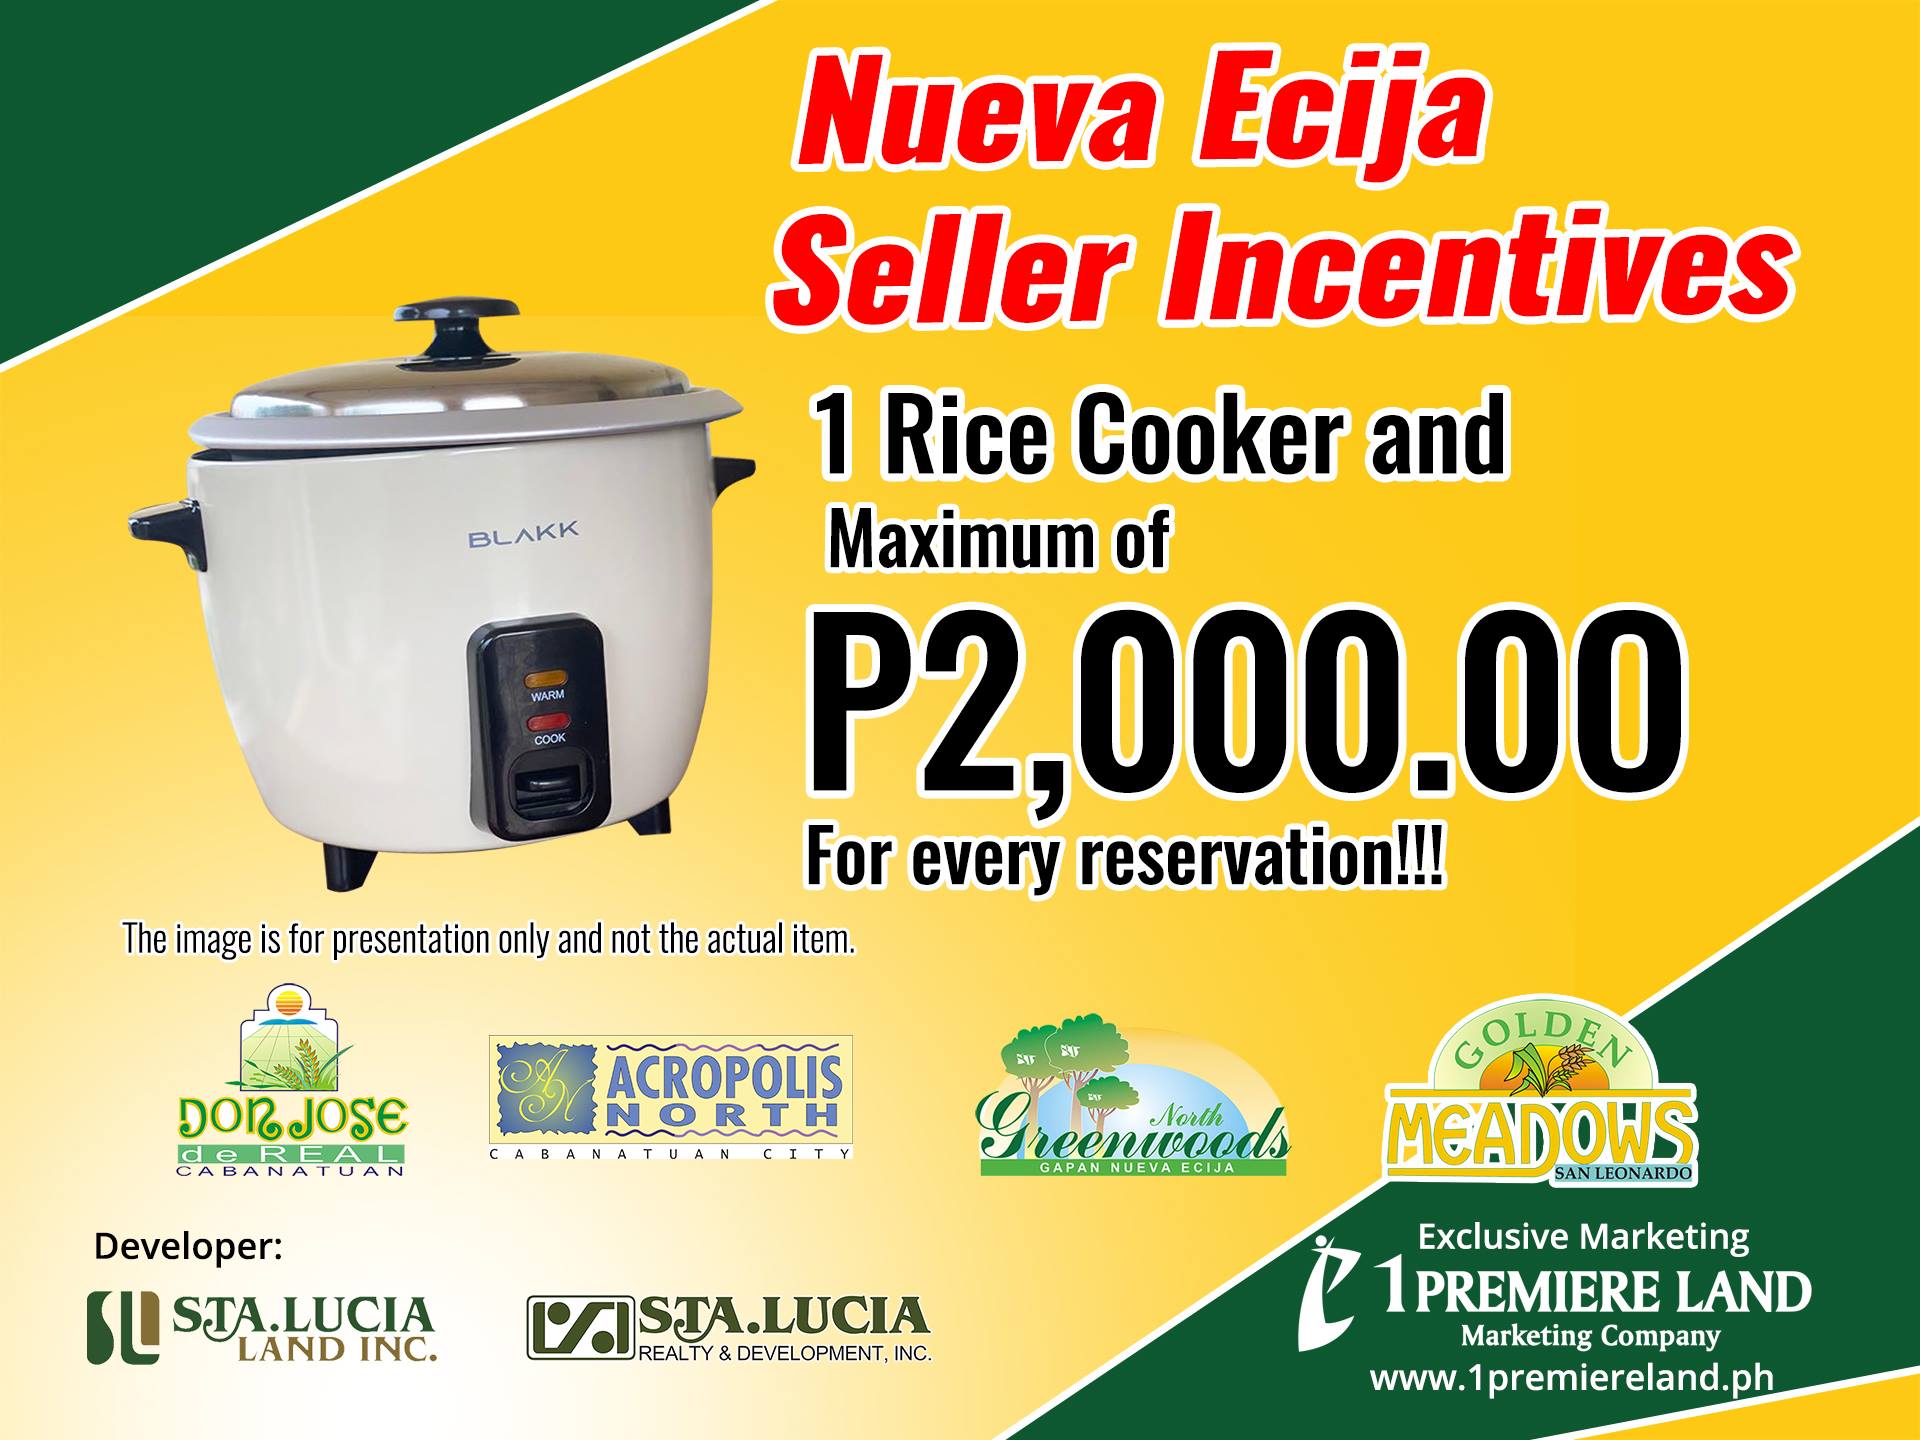 Seller Incentives in Nueva Ecija